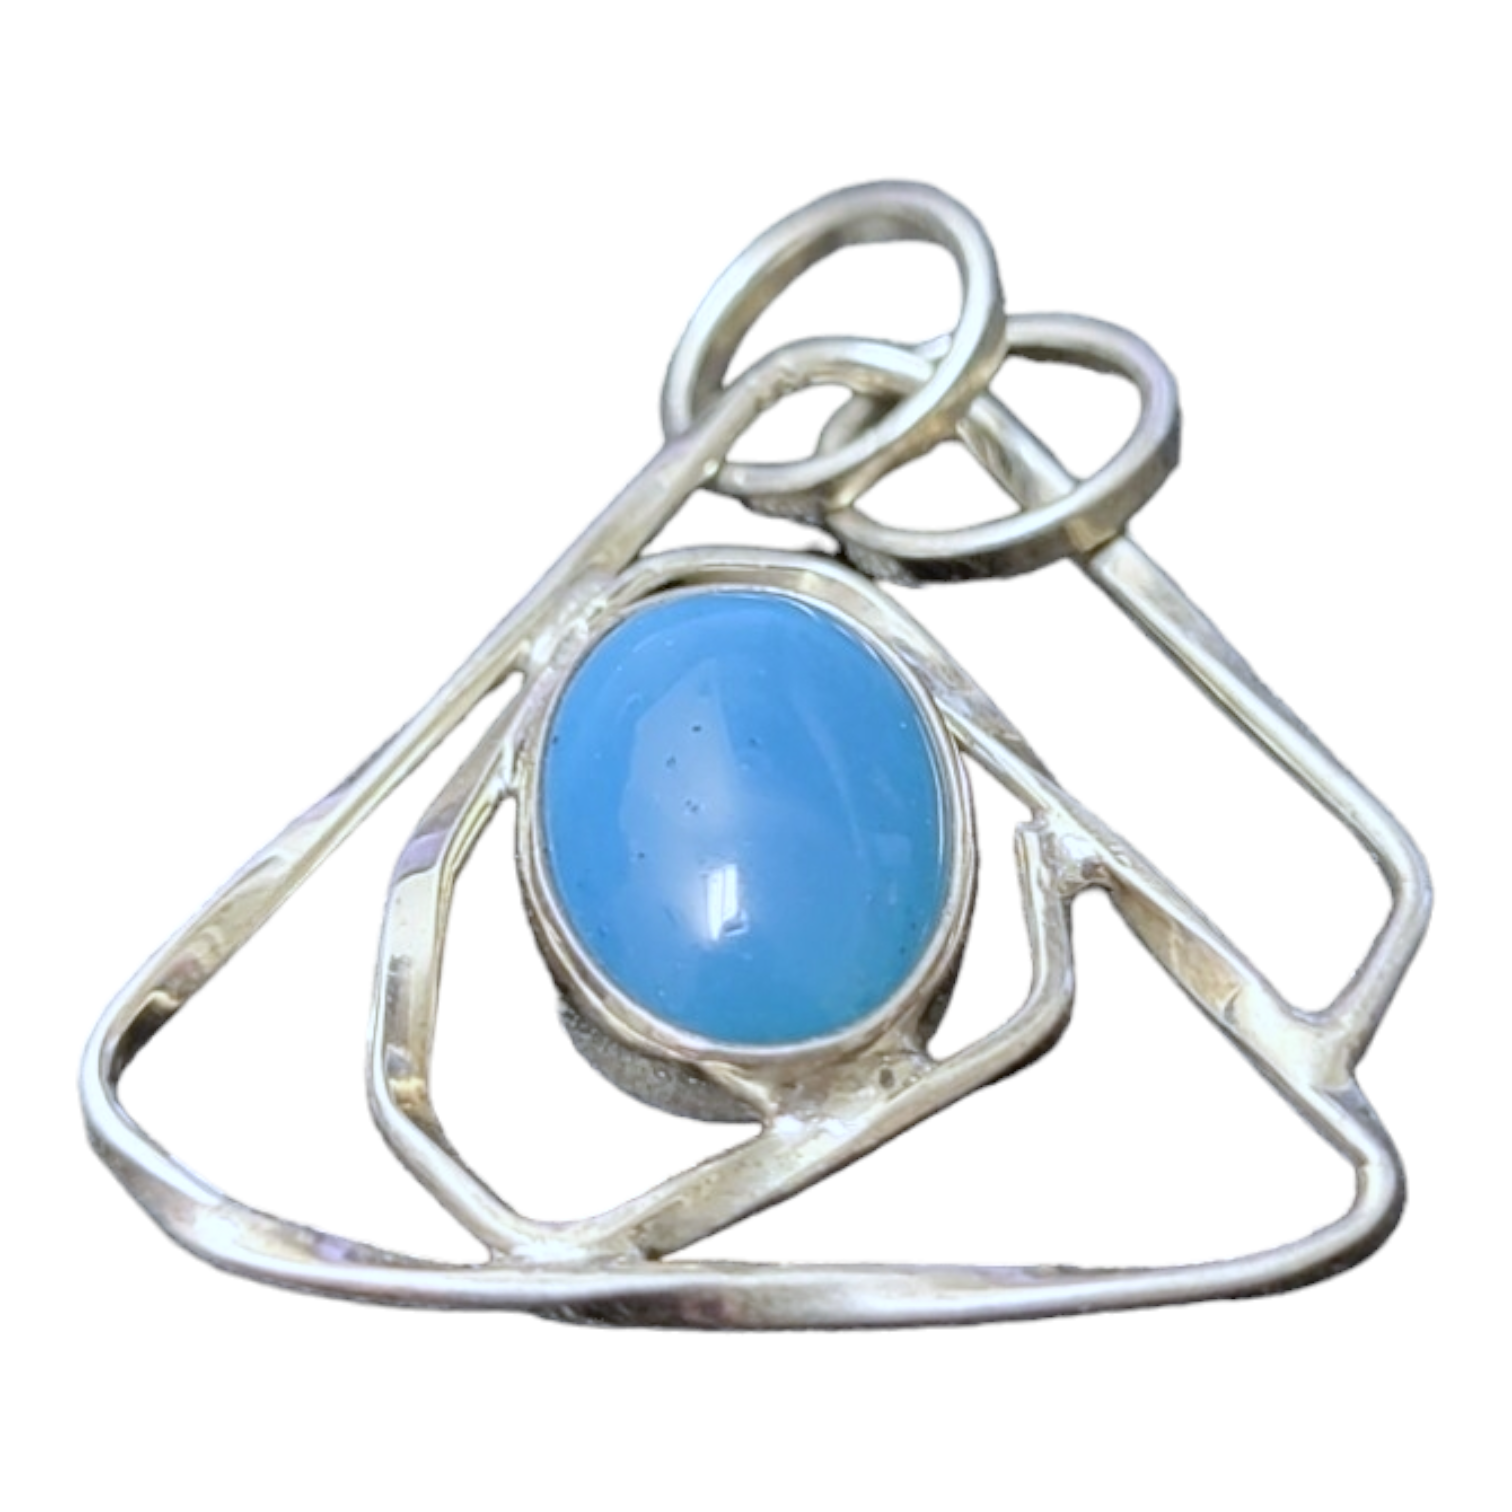 Necklace: Twisted Light Pendant - Swedish Blue